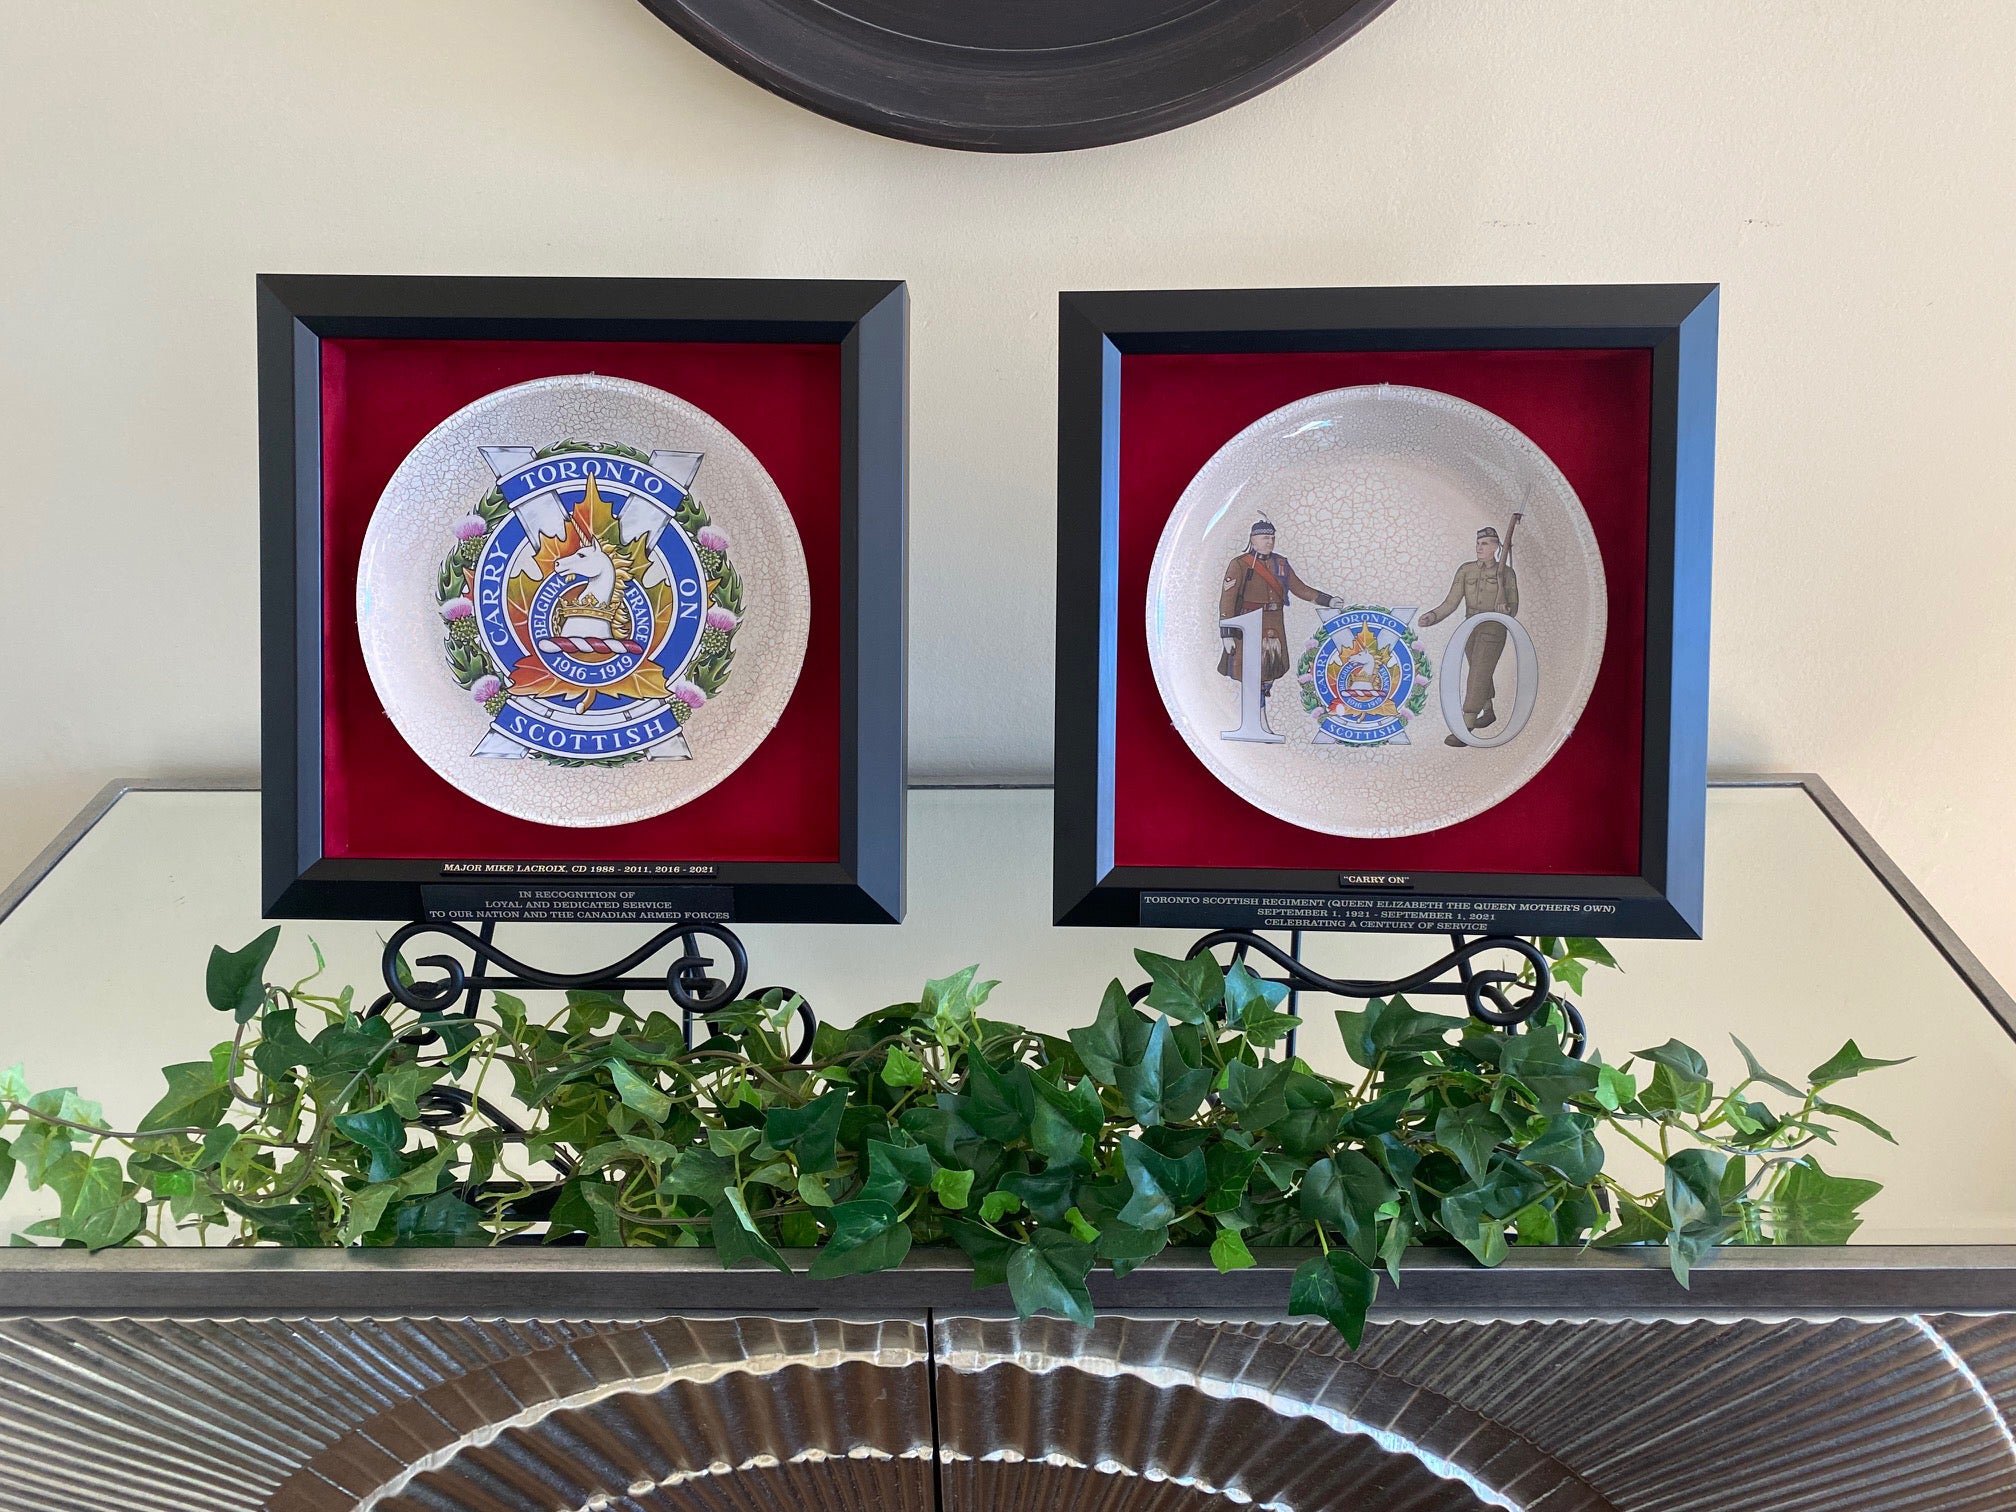 Toronto Scottish Regiment (Queen Elizabeth the Queen Mother’s Own) Centennial Commemorative Plate